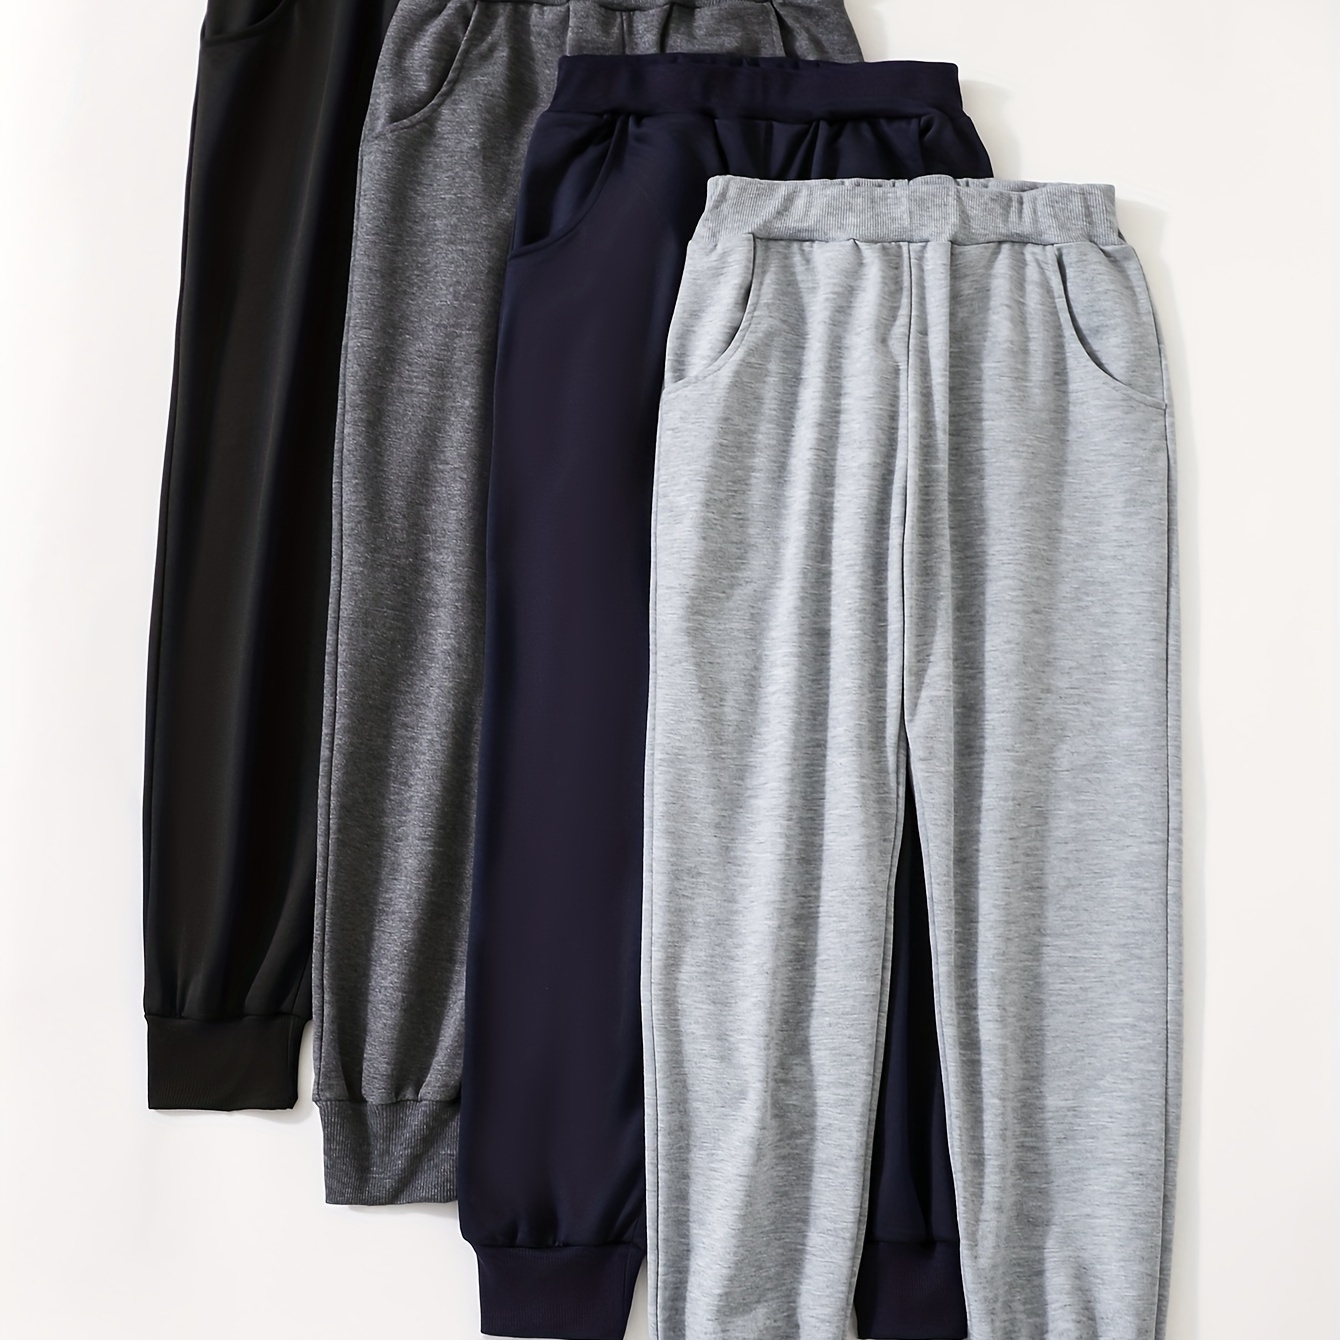 

4pcs Boys Casual Solid Color Comfortable Active Sweatpants, Breathable Jogger Sports Pants, Kids Clothes Outdoor